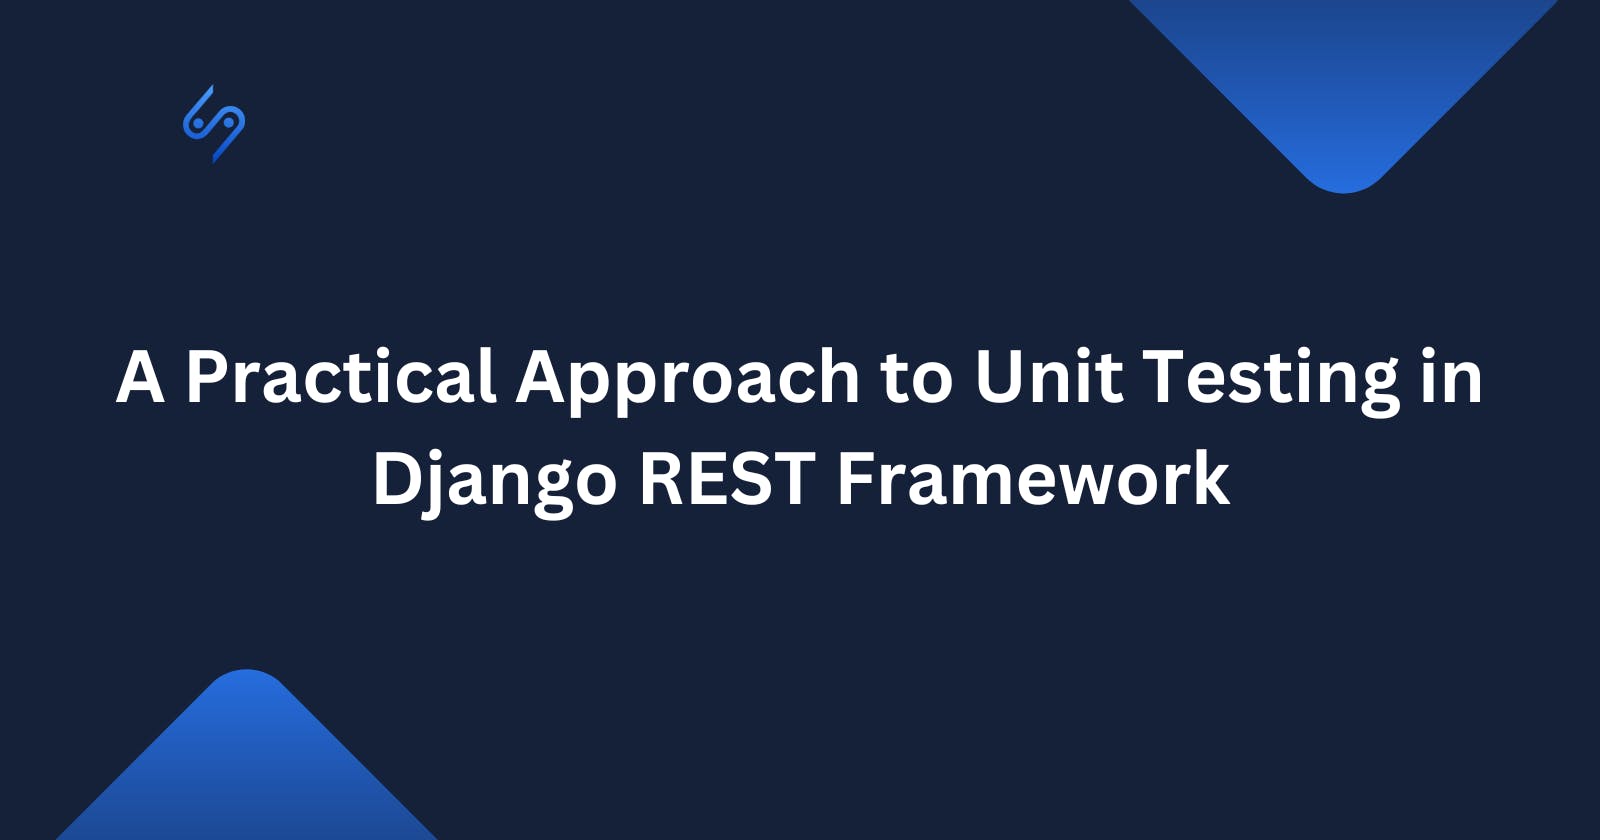 A Practical Approach to Unit Testing in Django REST Framework